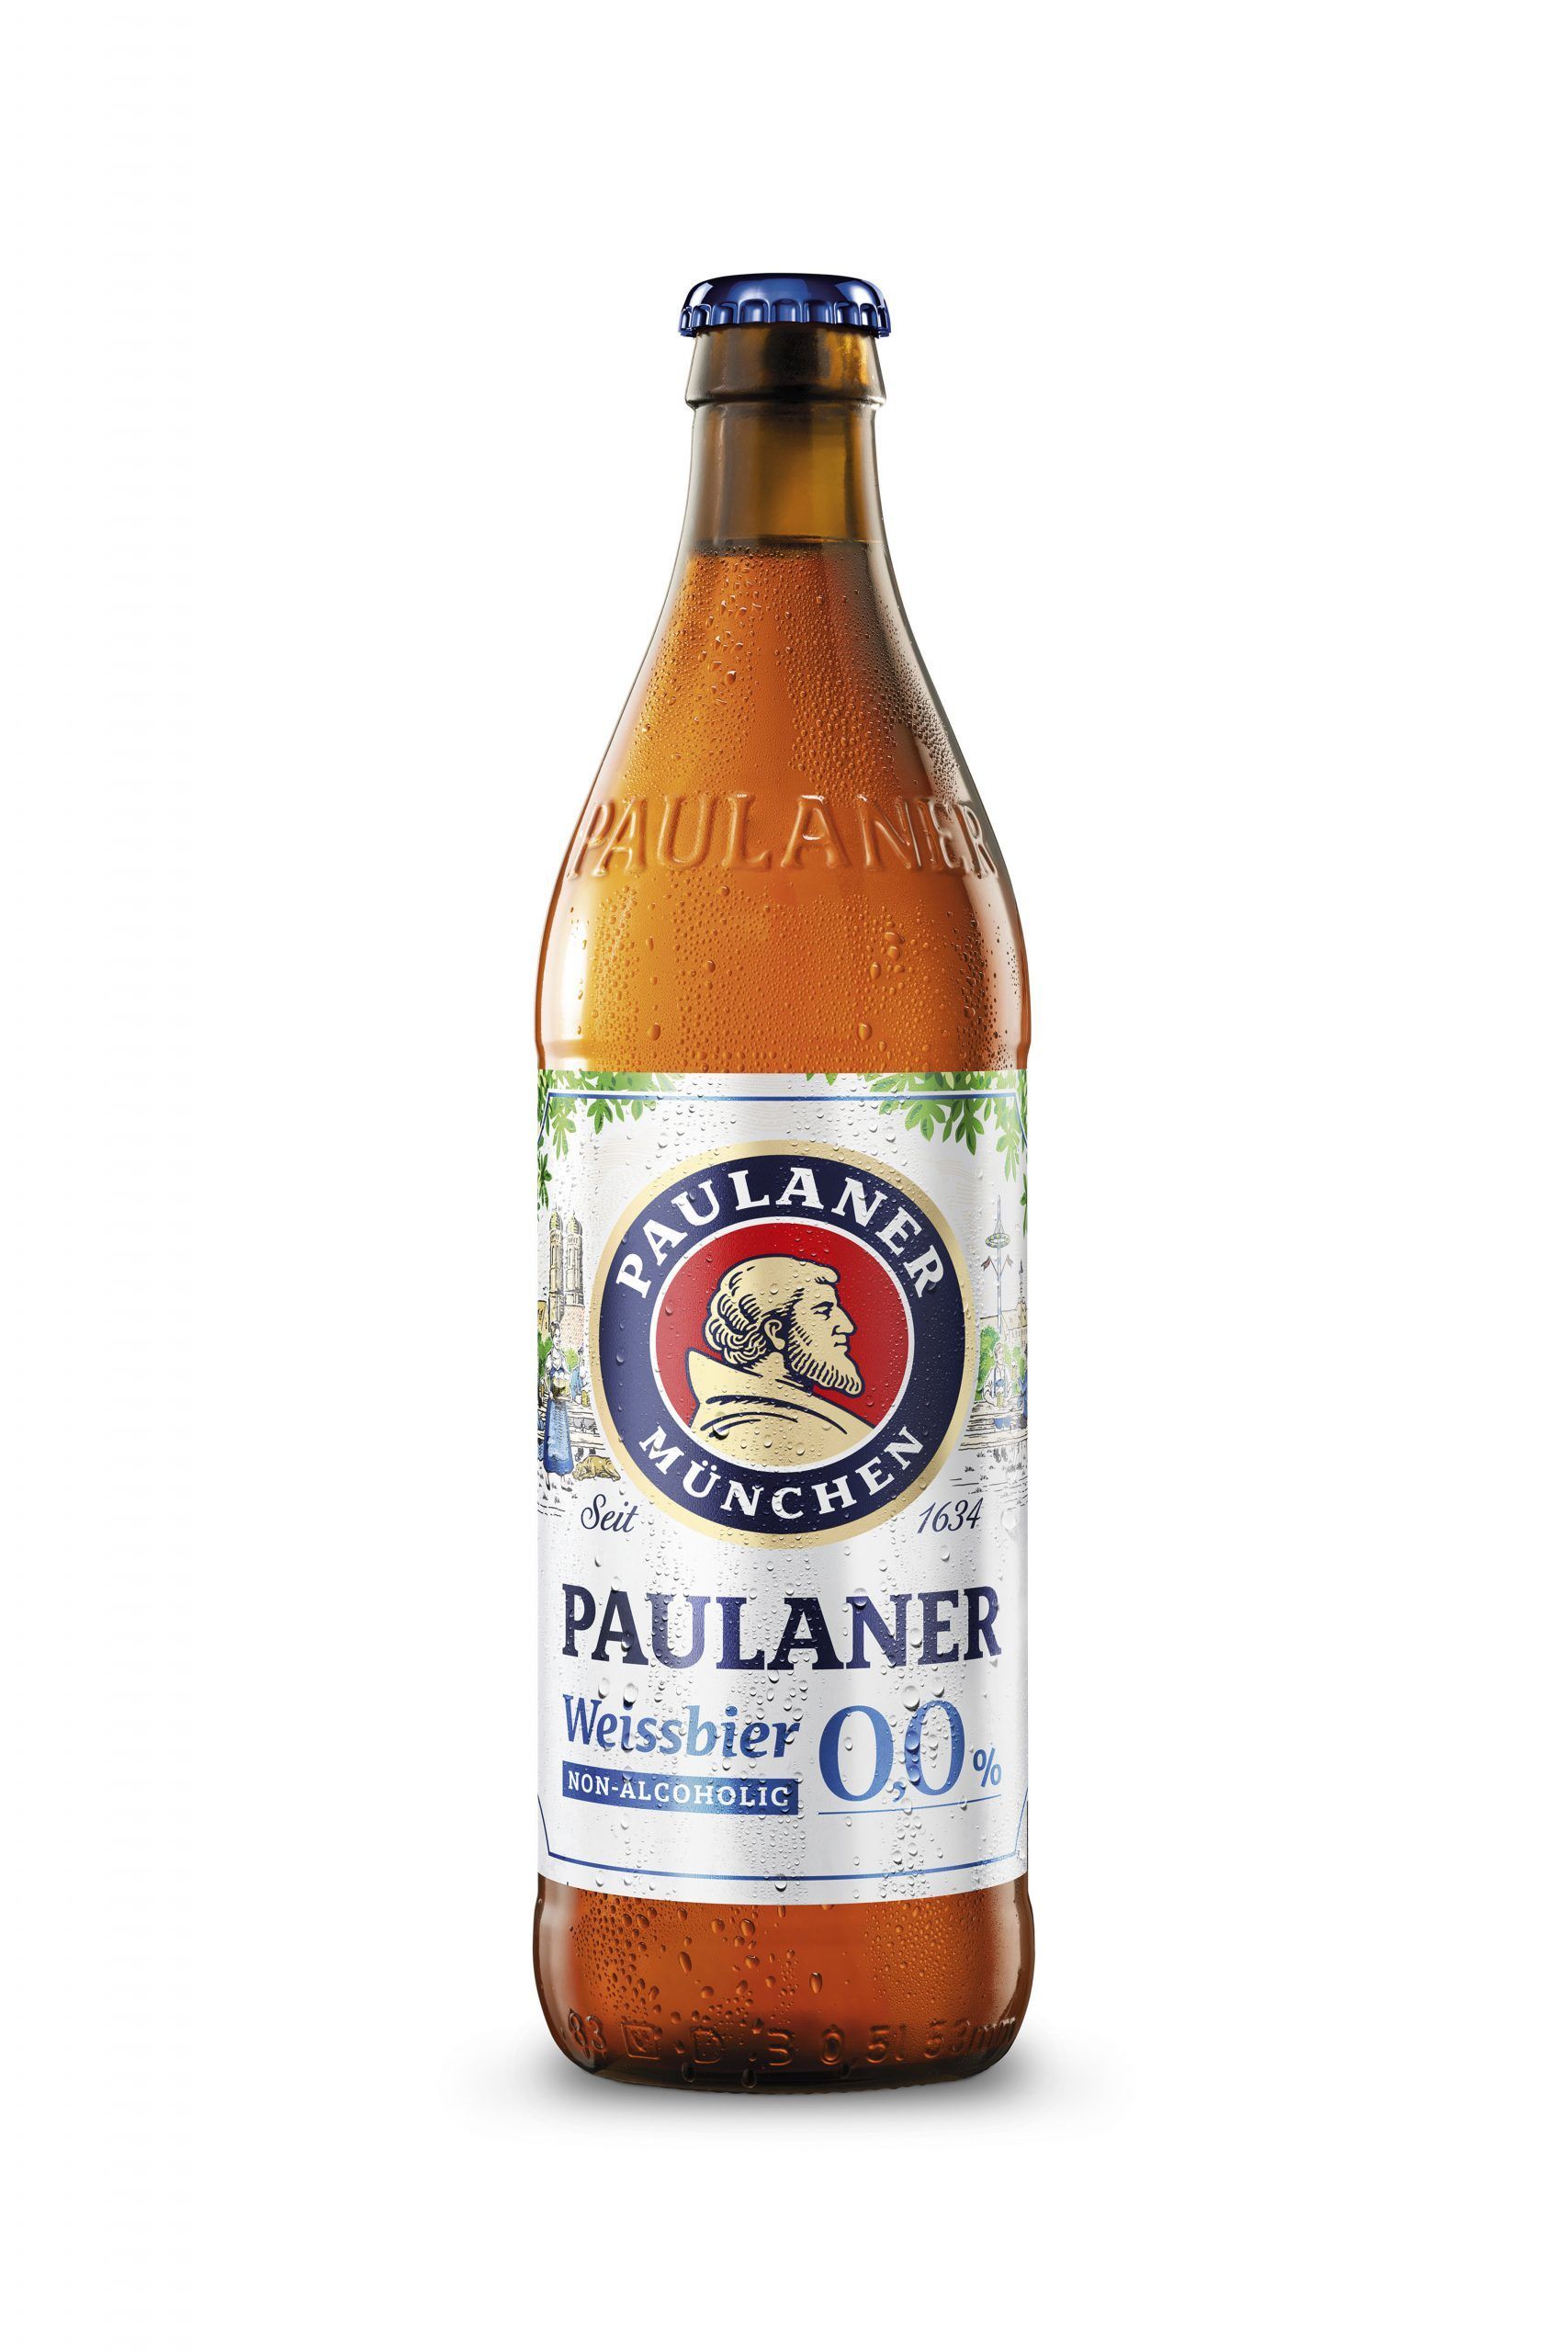 Пиво Паулайнер Хефе Вайсбир н/ф б/а с/т 0,5 л (Германия)